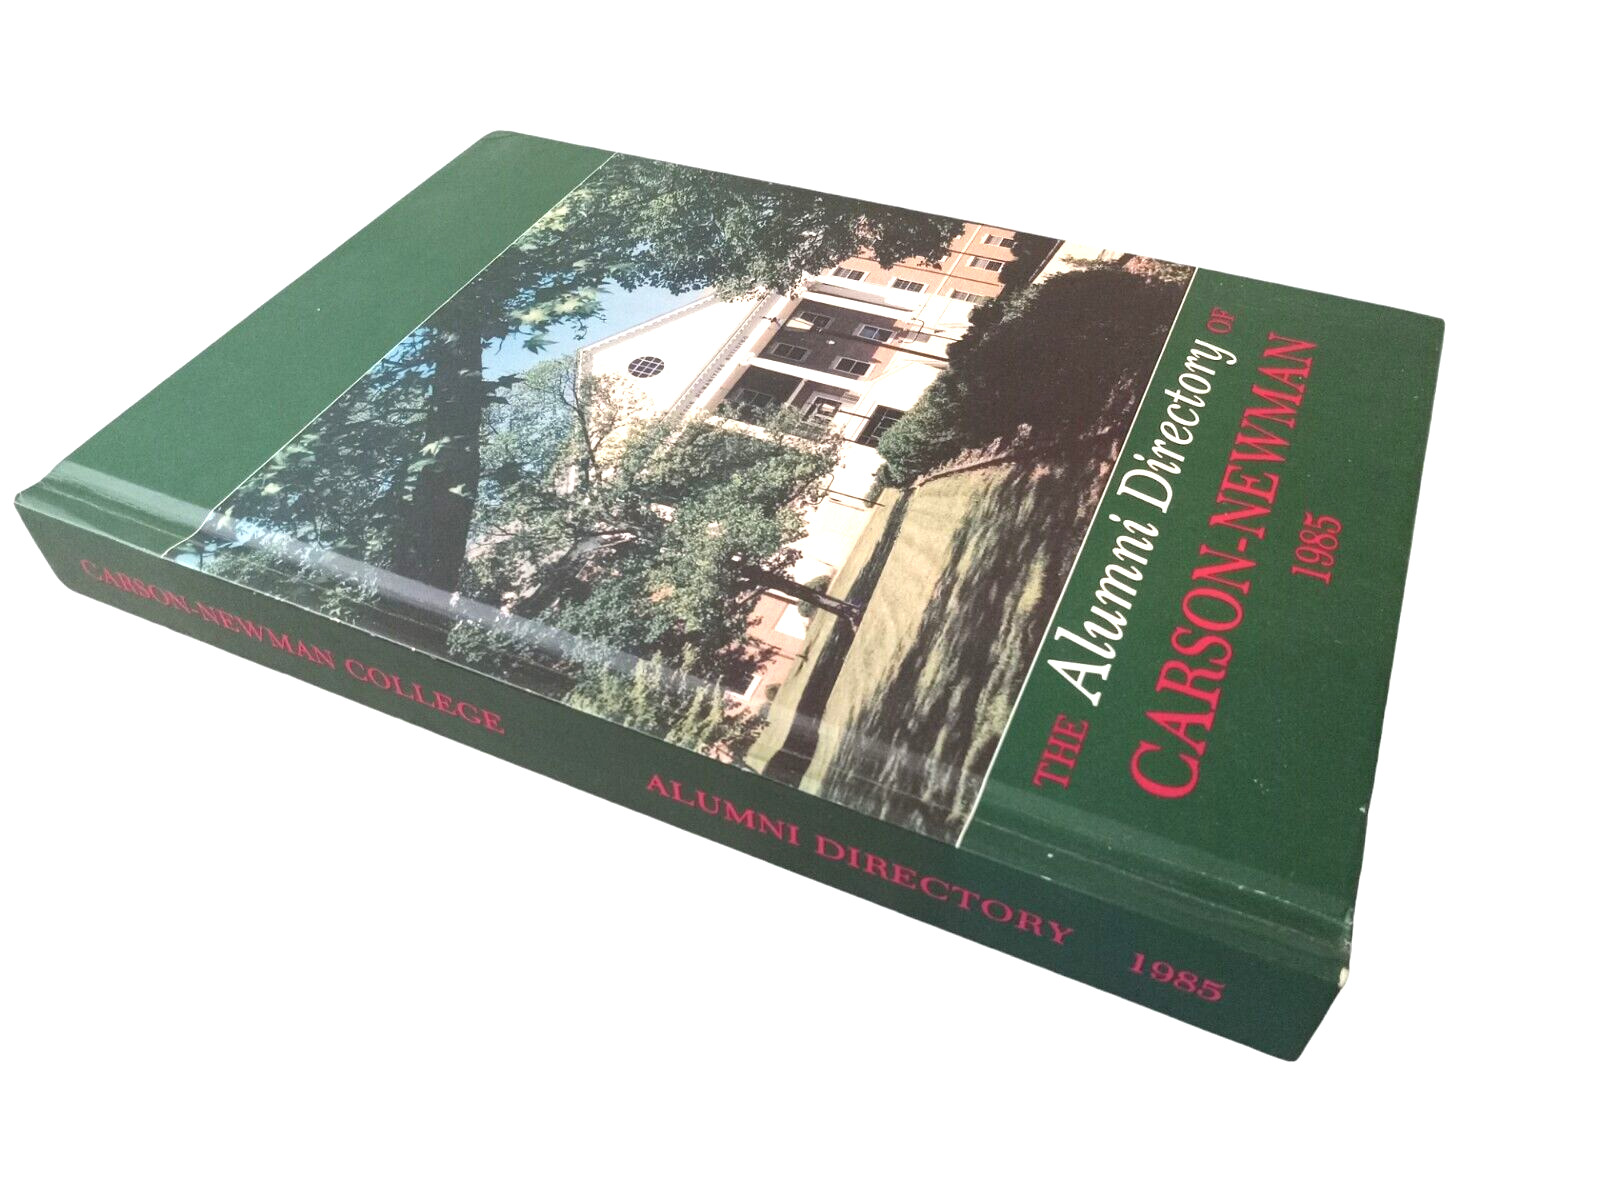 1985 The Alumni Directory of CARSON NEWMAN College University Hardcover Book